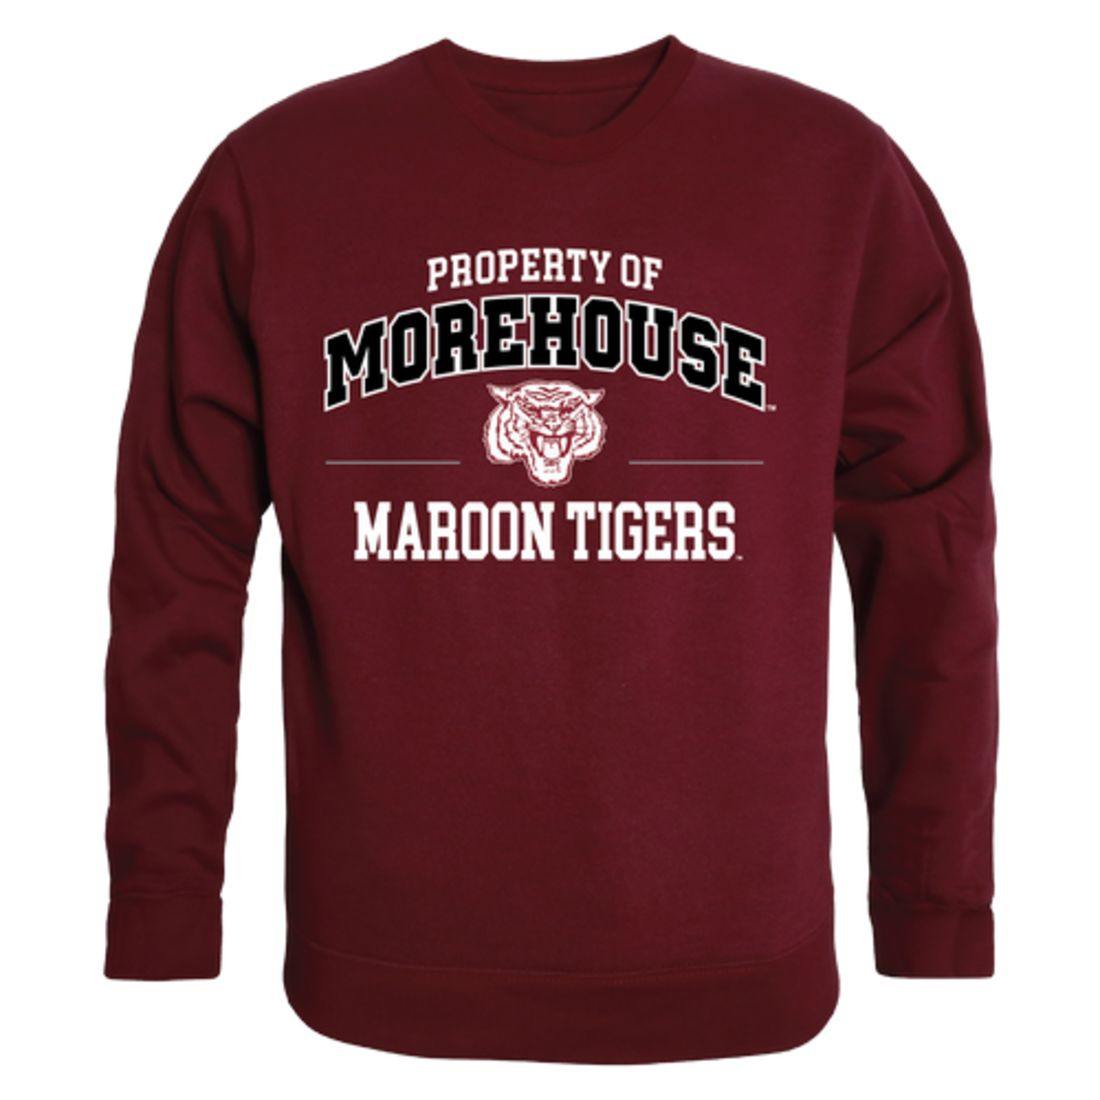 Morehouse College MaroonTigers Property Crewneck Pullover Sweatshirt Sweater Maroon-Campus-Wardrobe